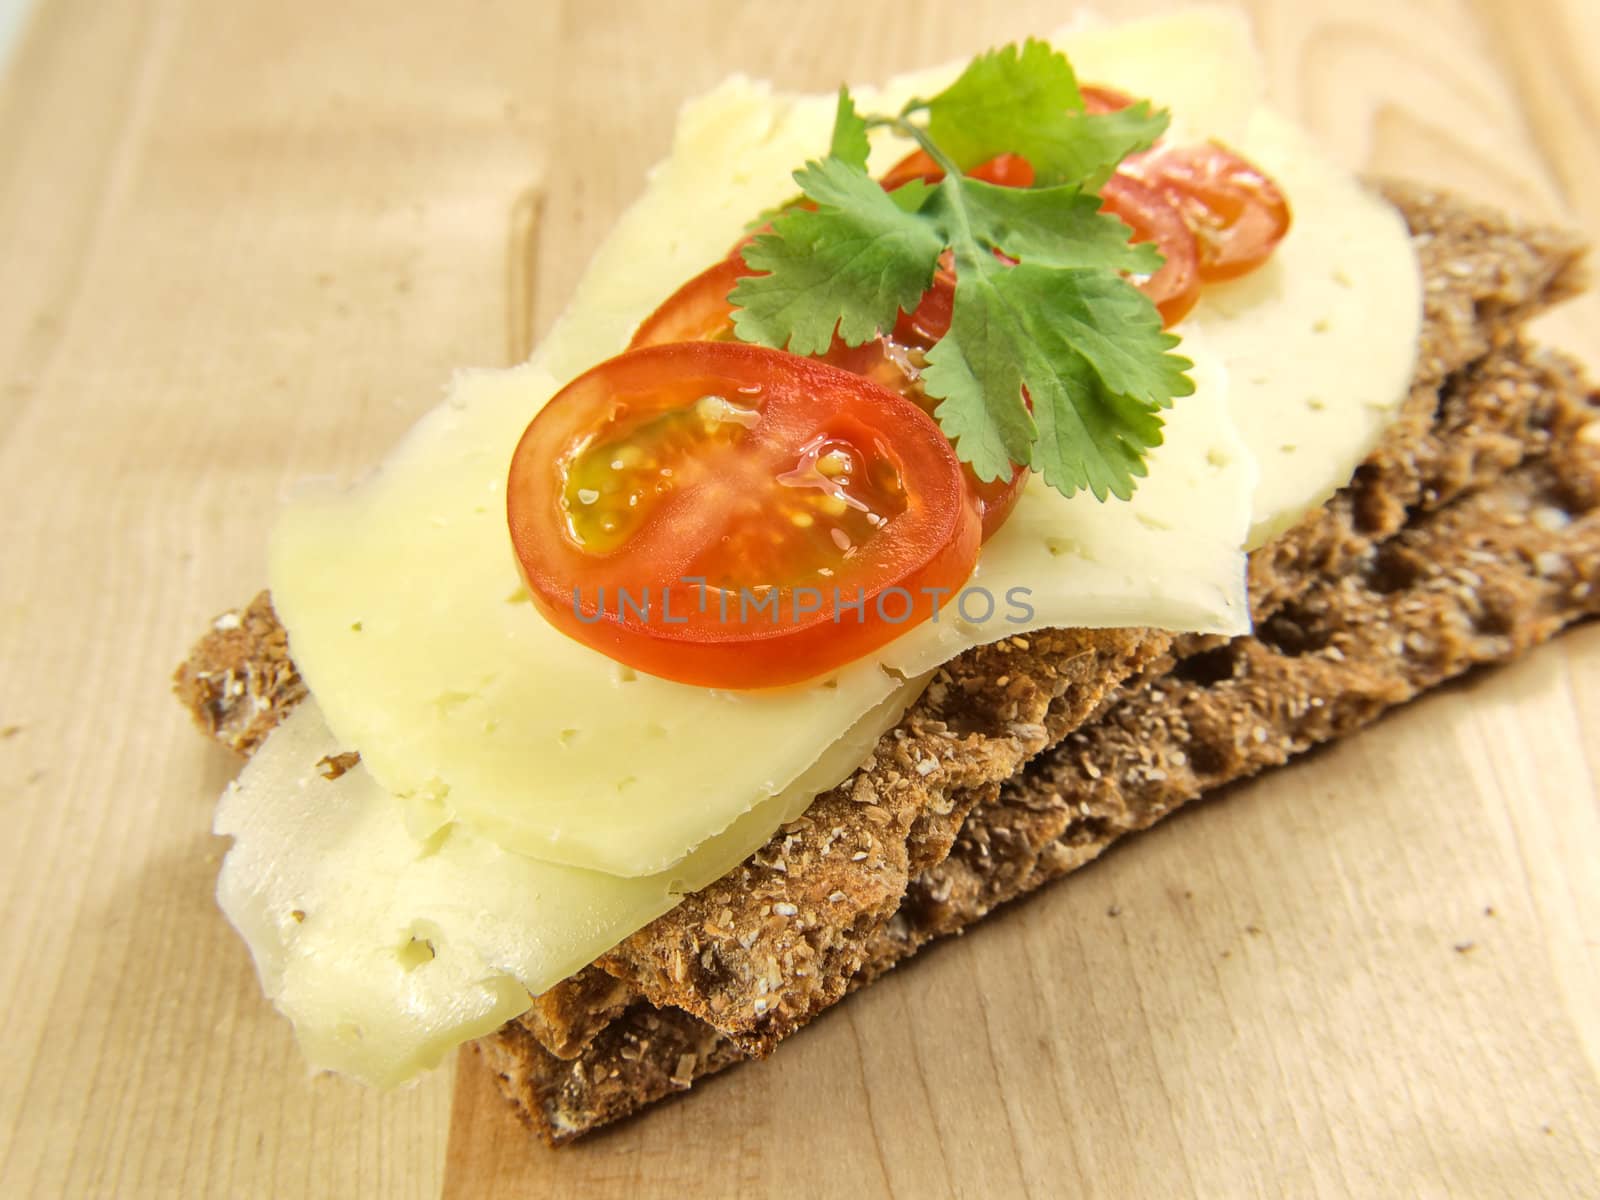 Cracker, tomato and cheese by Arvebettum